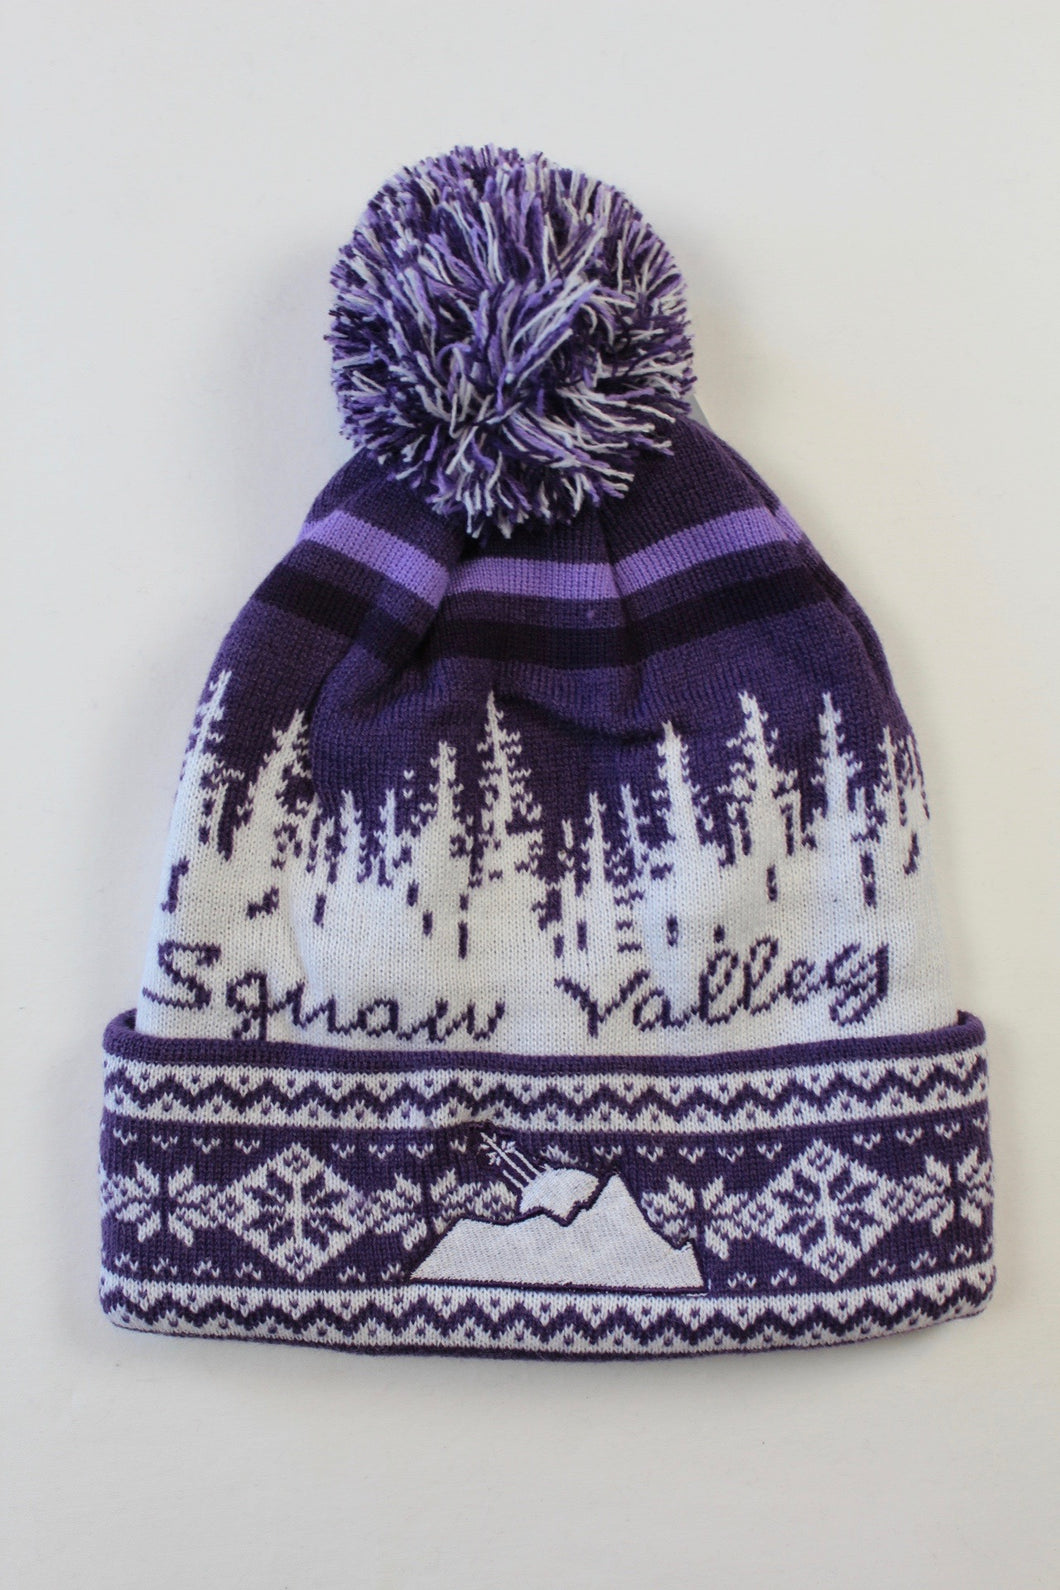 Knit Hat - WinterWonderGrass, Squaw Valley, Purple Snowflake